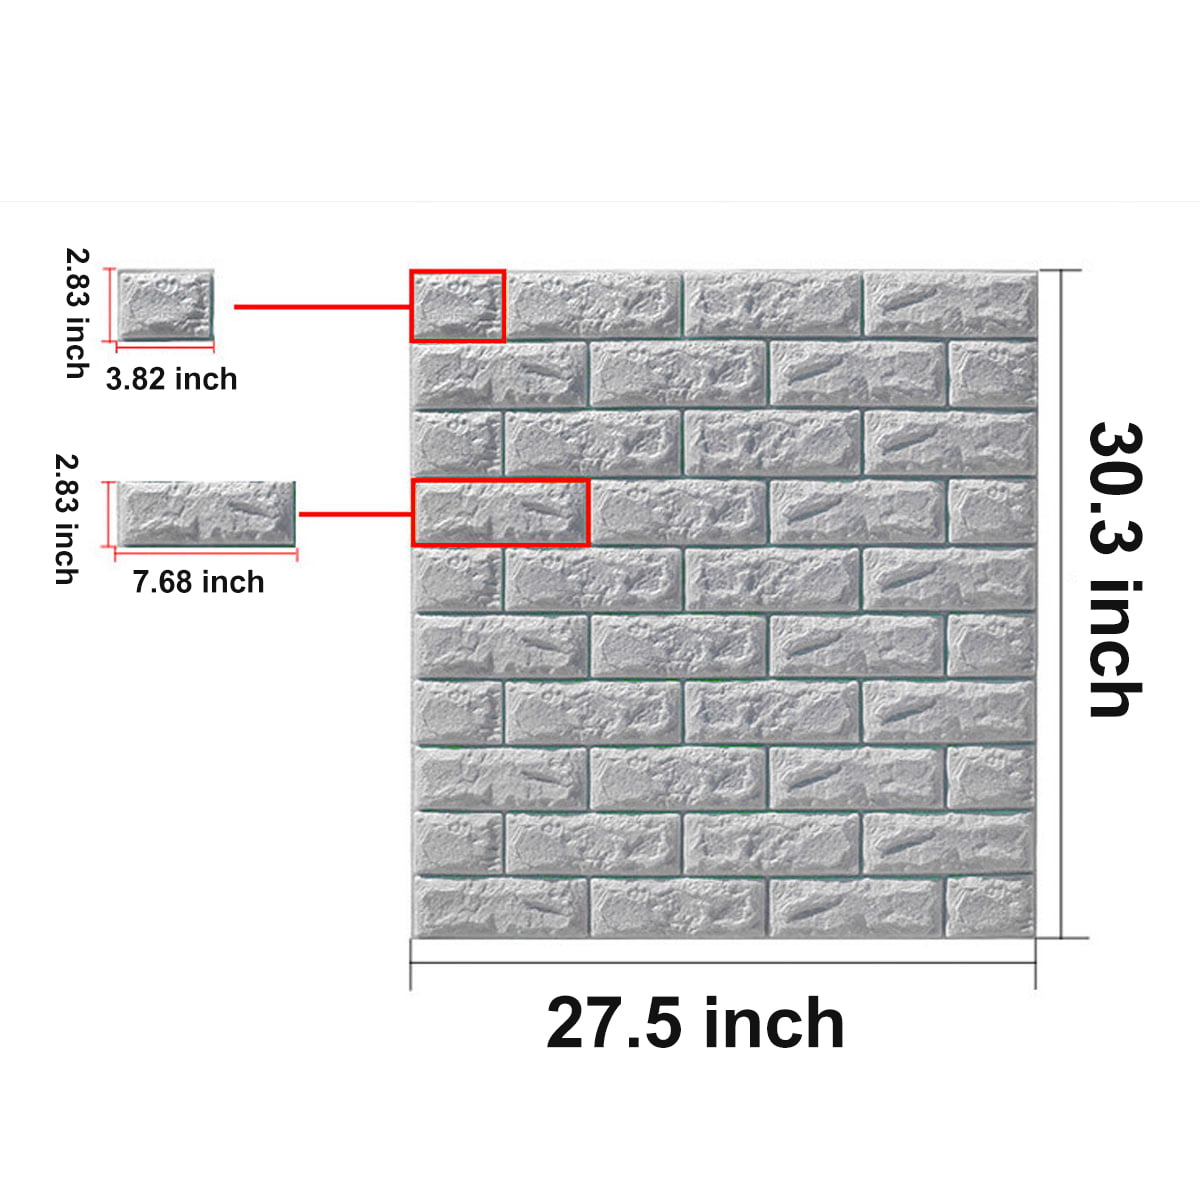 3D Tile Brick Wall Sticker Self-adhesive Waterproof Panel Bumper DIY Home Decor 